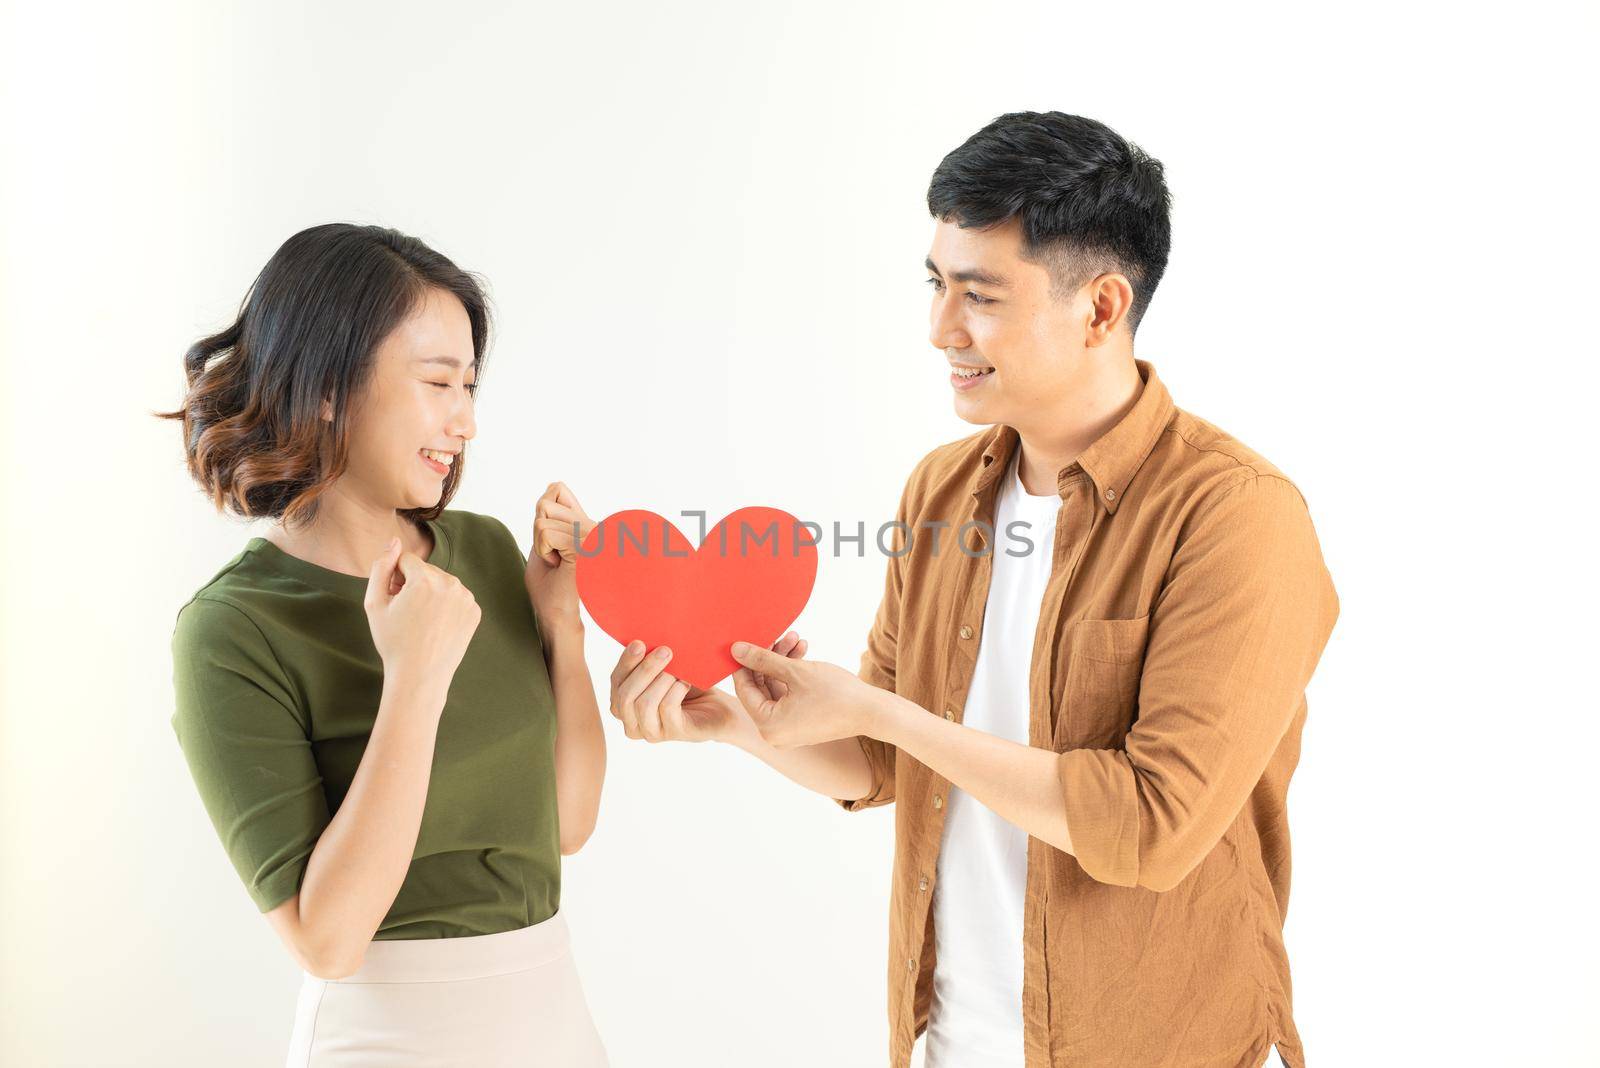 Smiling loving couple holding heart shape over white background.